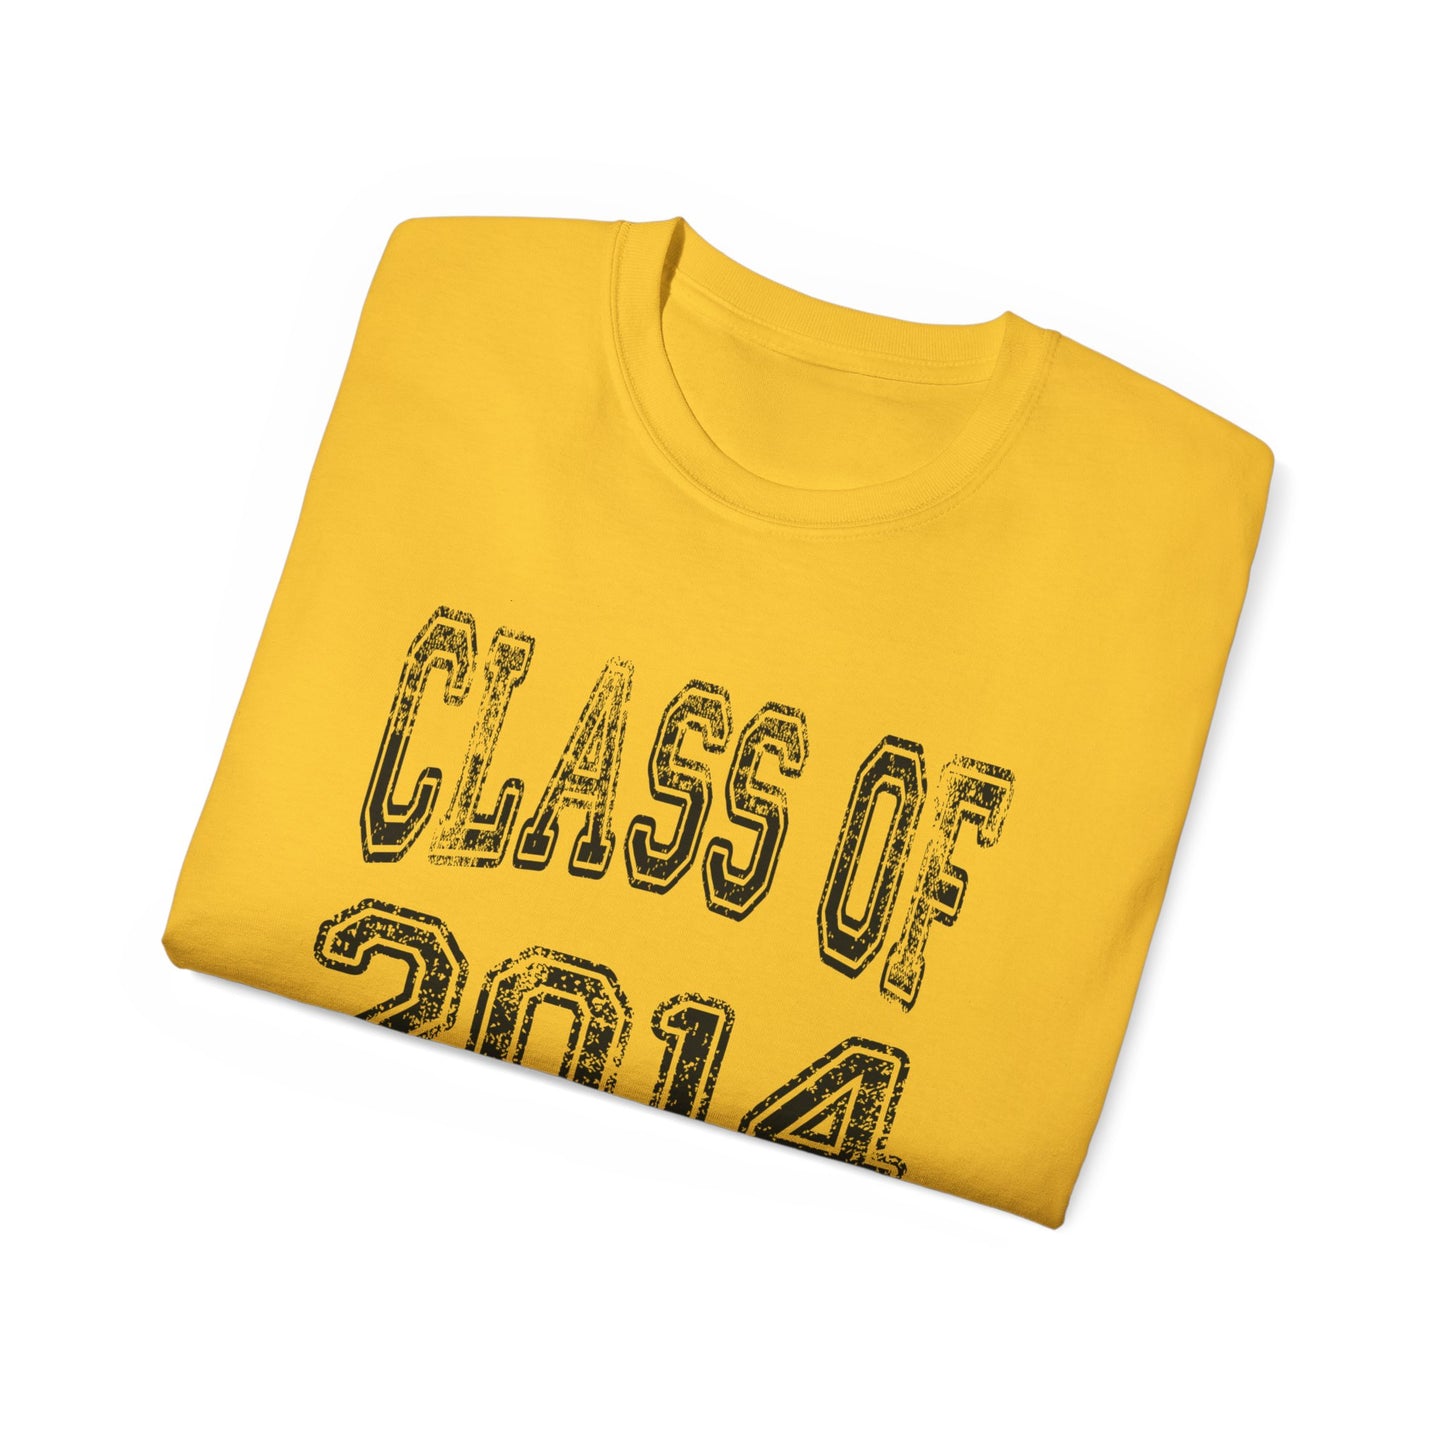 Class of 2014 Senior 14 Black Text Grad Celebration Graduate Goals Choose Your School Color Vintage Distressed Tee Unisex Ultra Cotton Tee